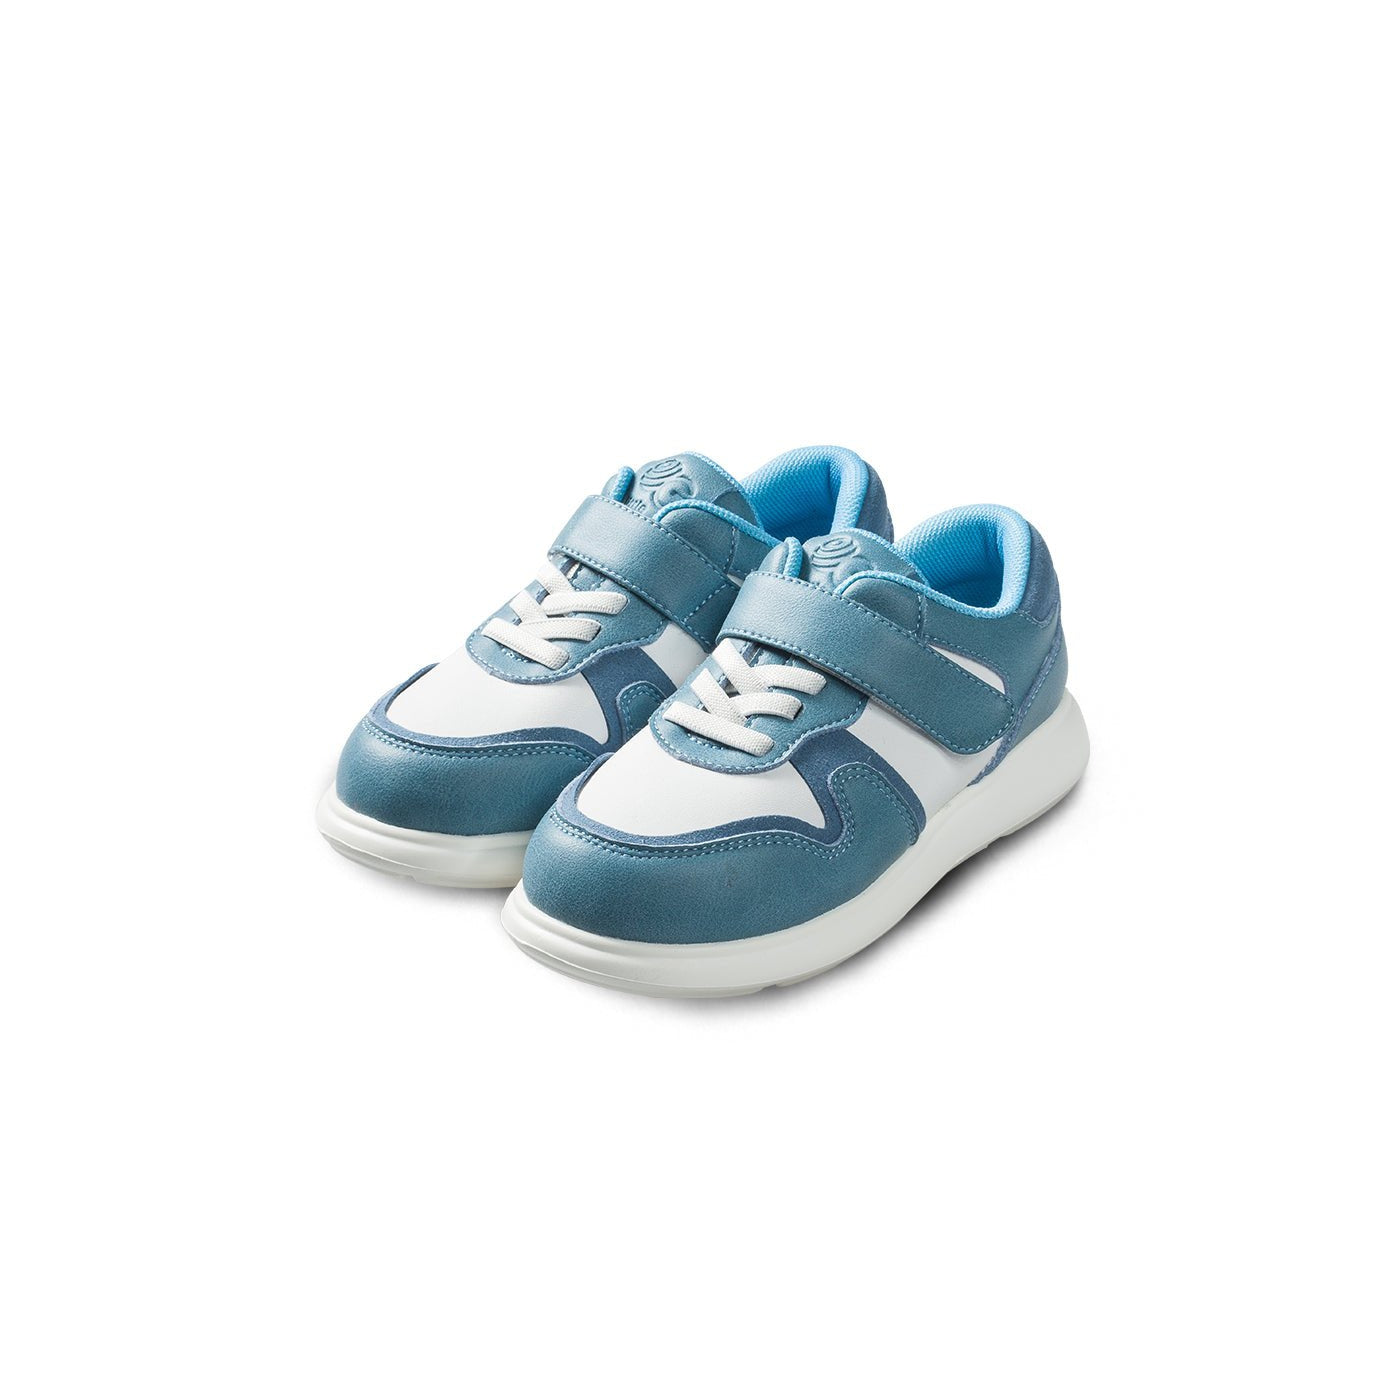 Tough Force Extra Lightweight Anti-slip Kids Blue Sneakers - 0cm